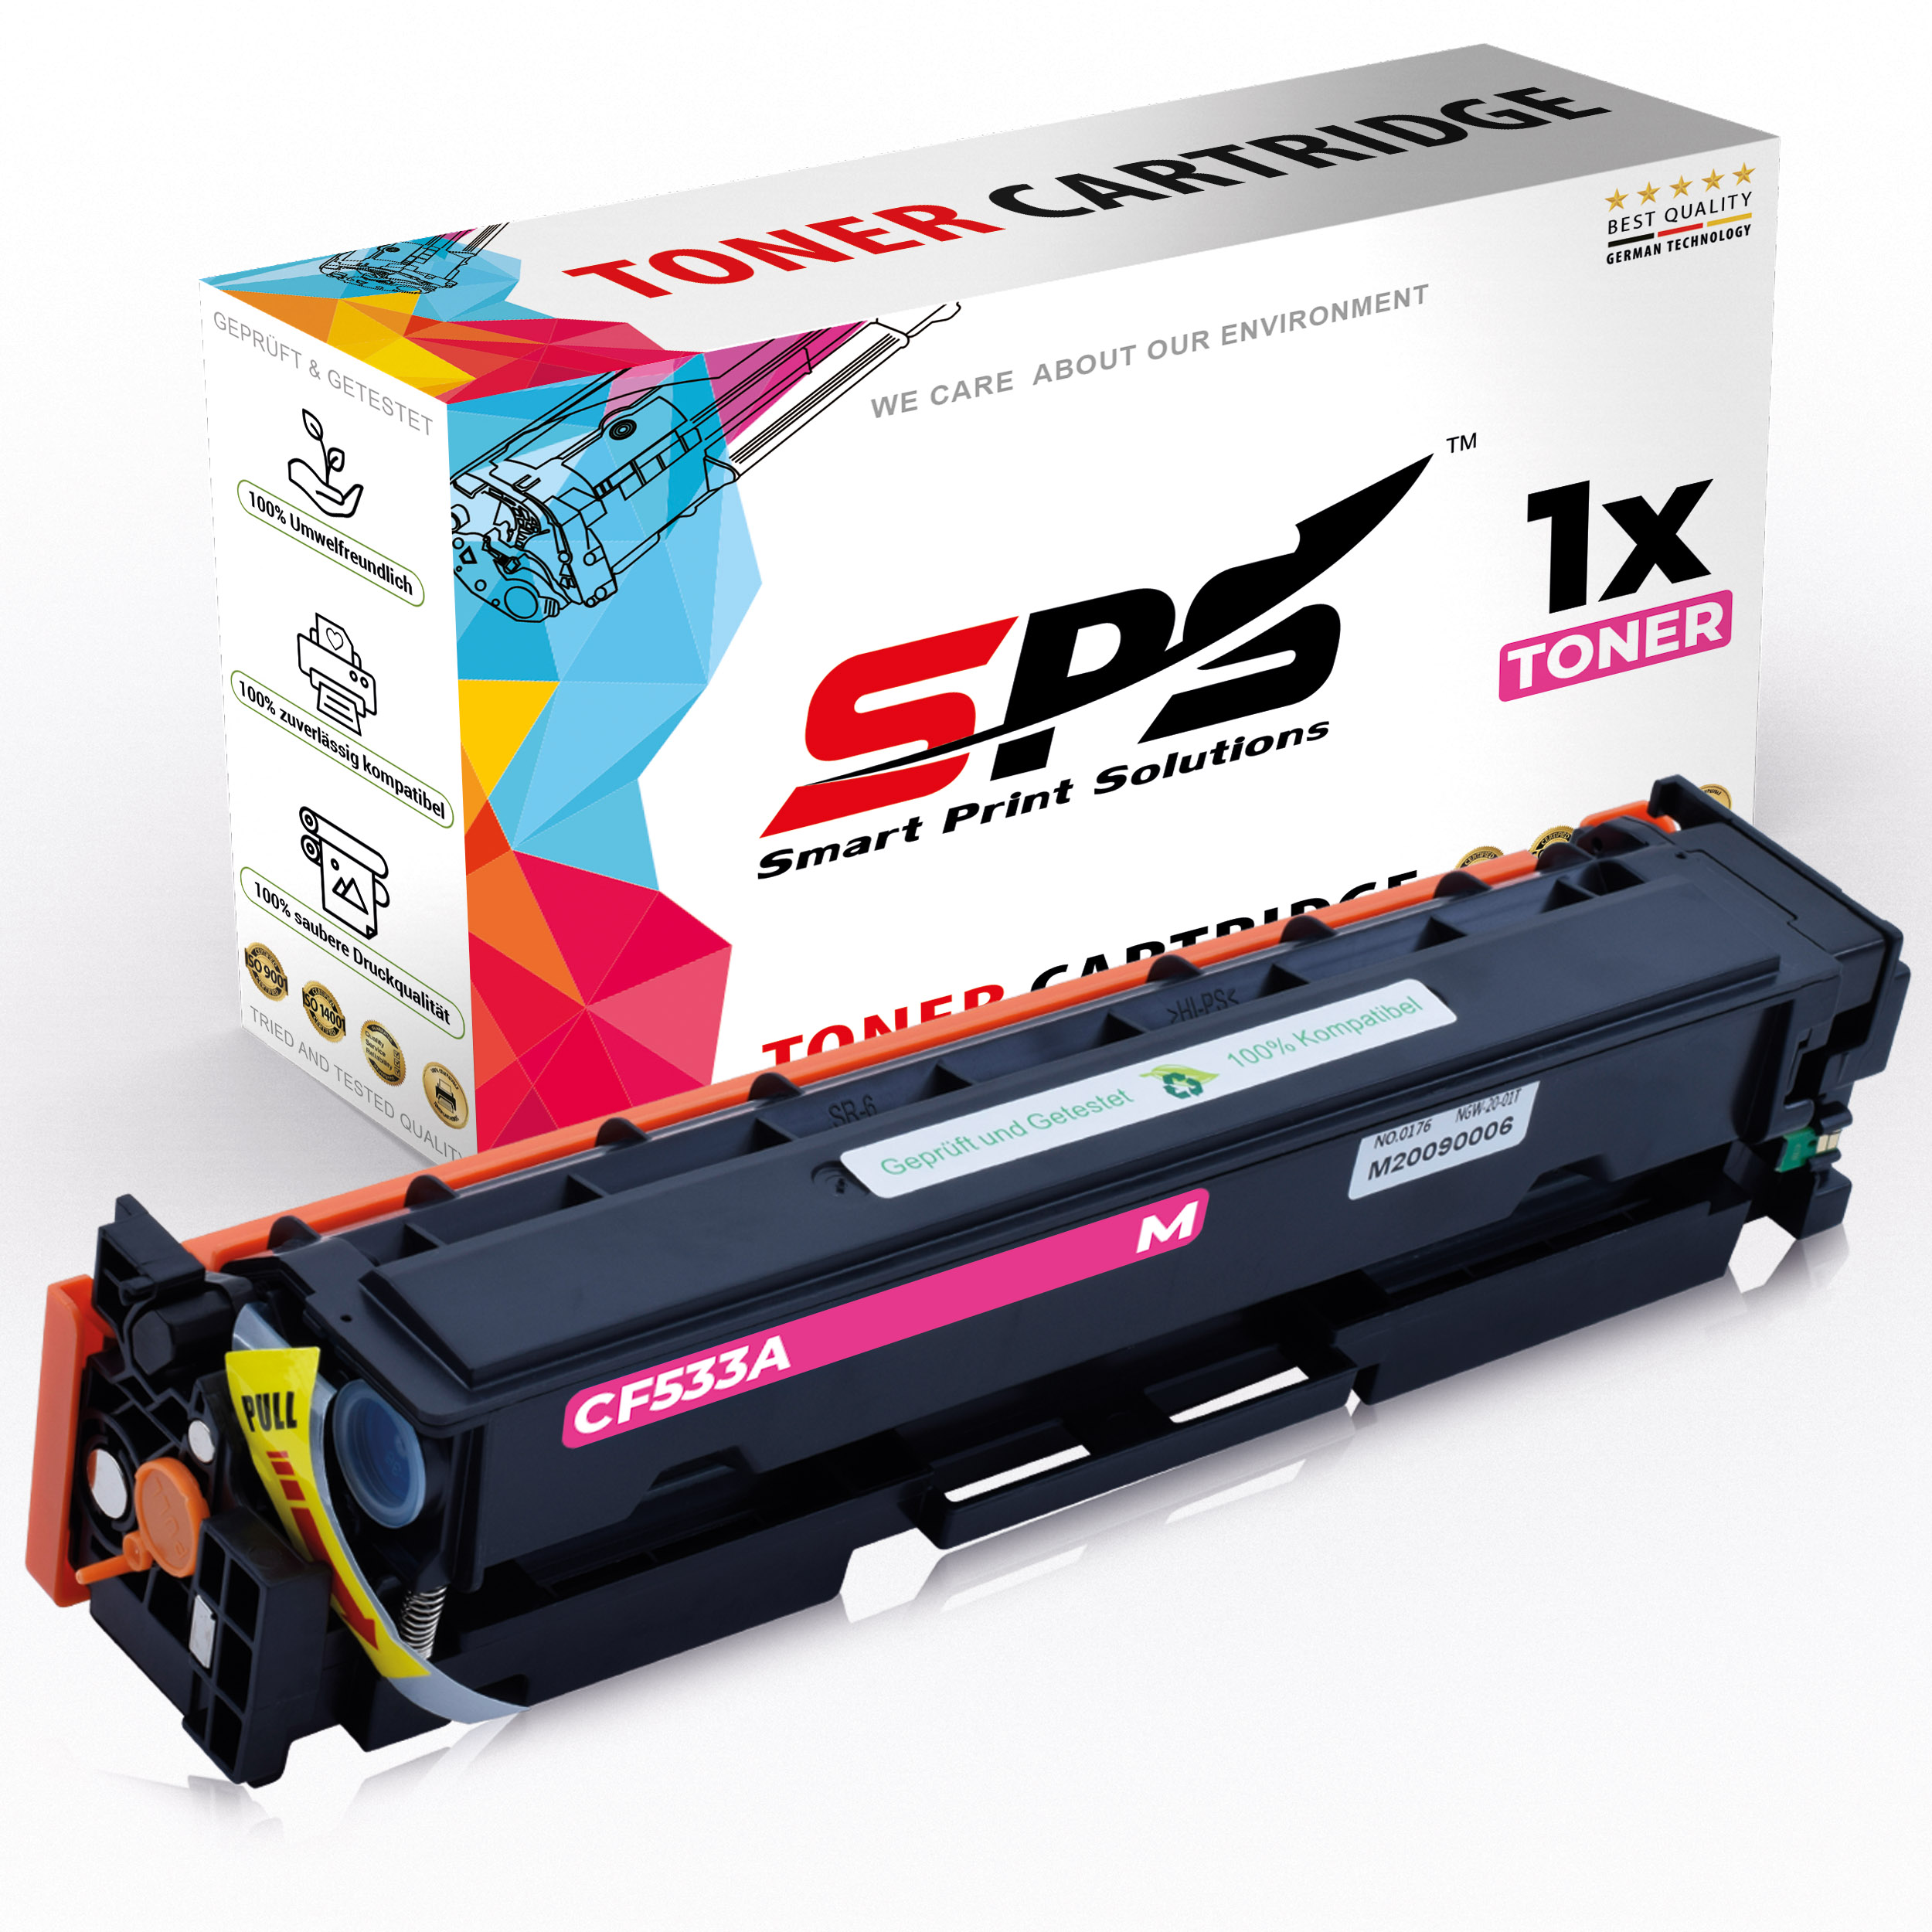 MFP Magenta / CF533A M180) SPS Color (205A Toner S-16650 Laserjet Pro